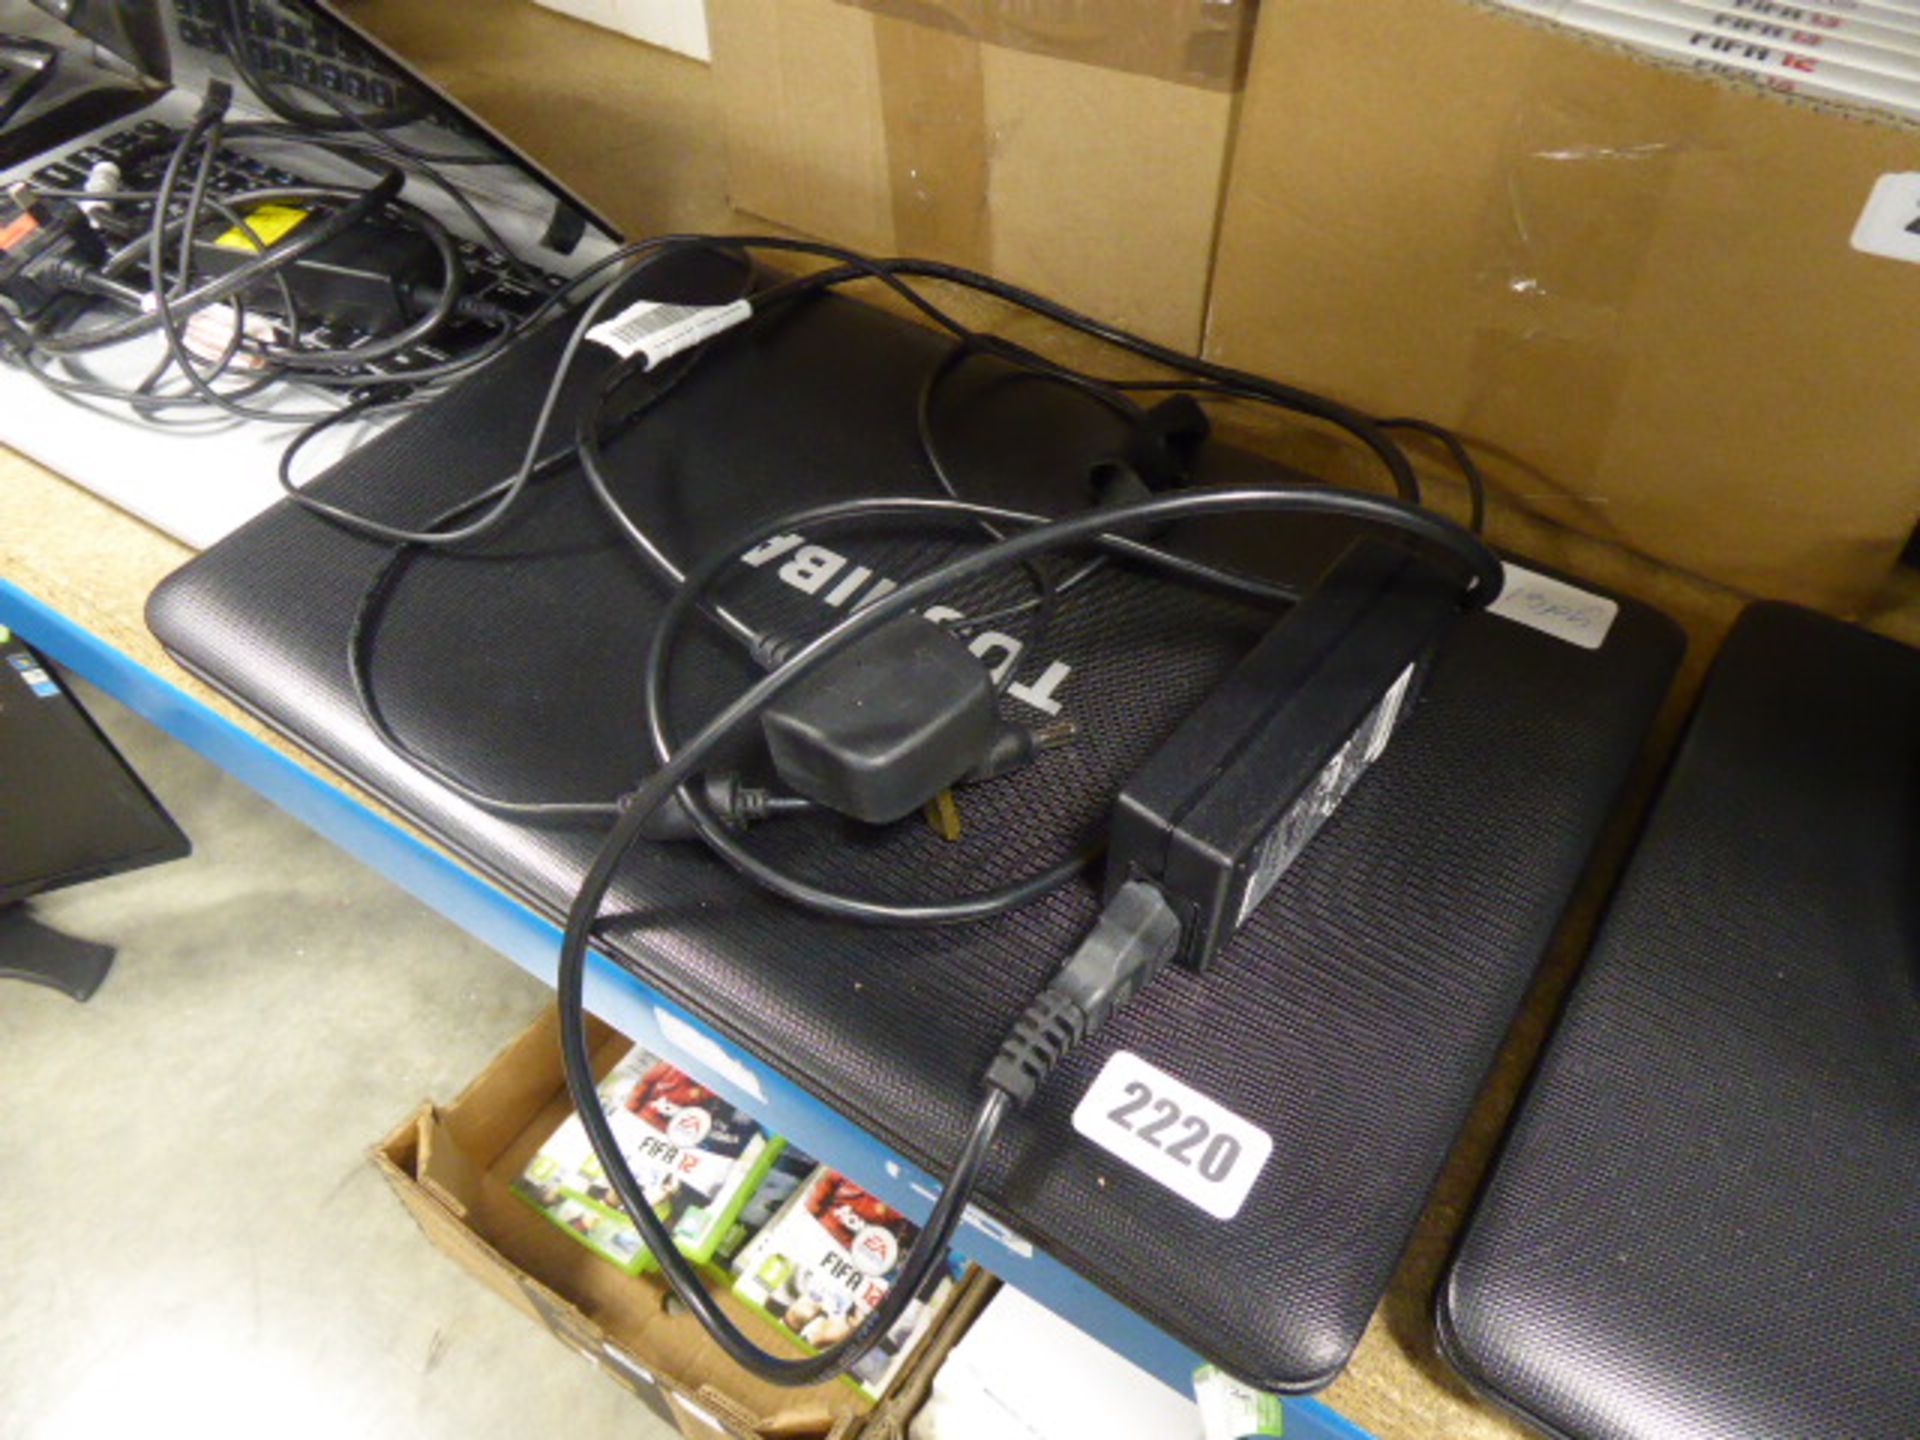 Toshiba Satellite laptop with power supply